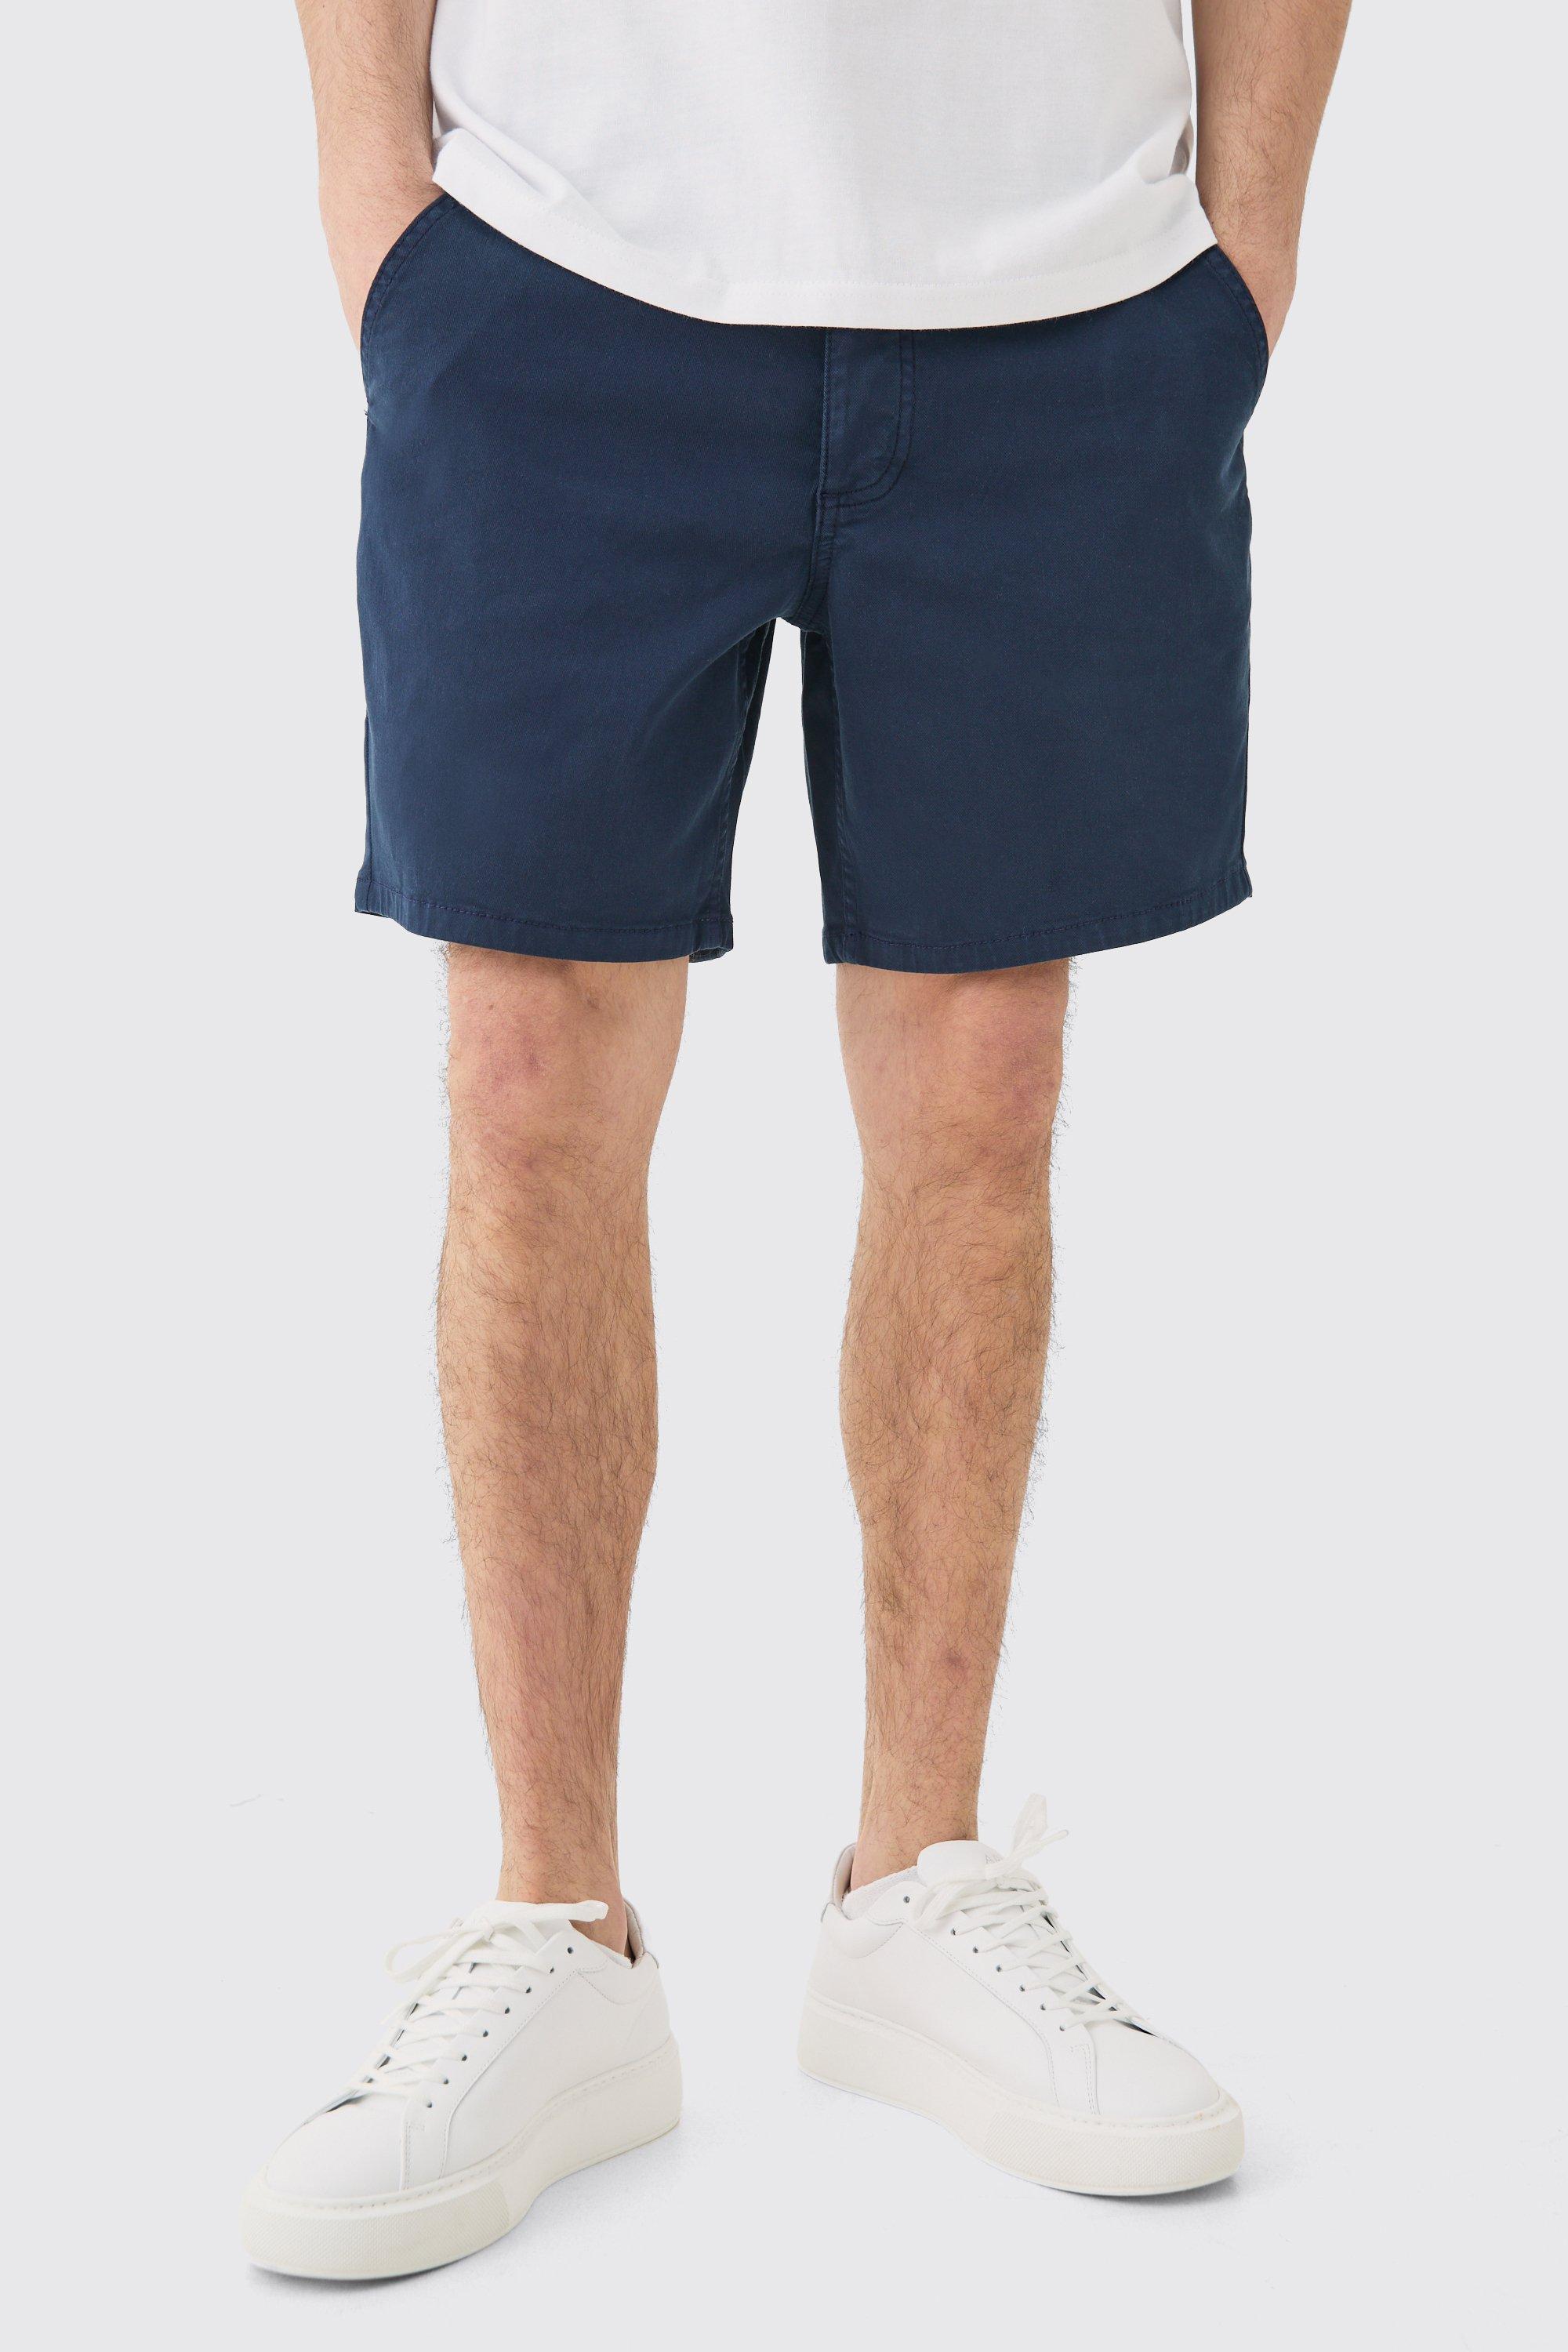 Image of Pantaloncini Chino Slim Fit, Navy